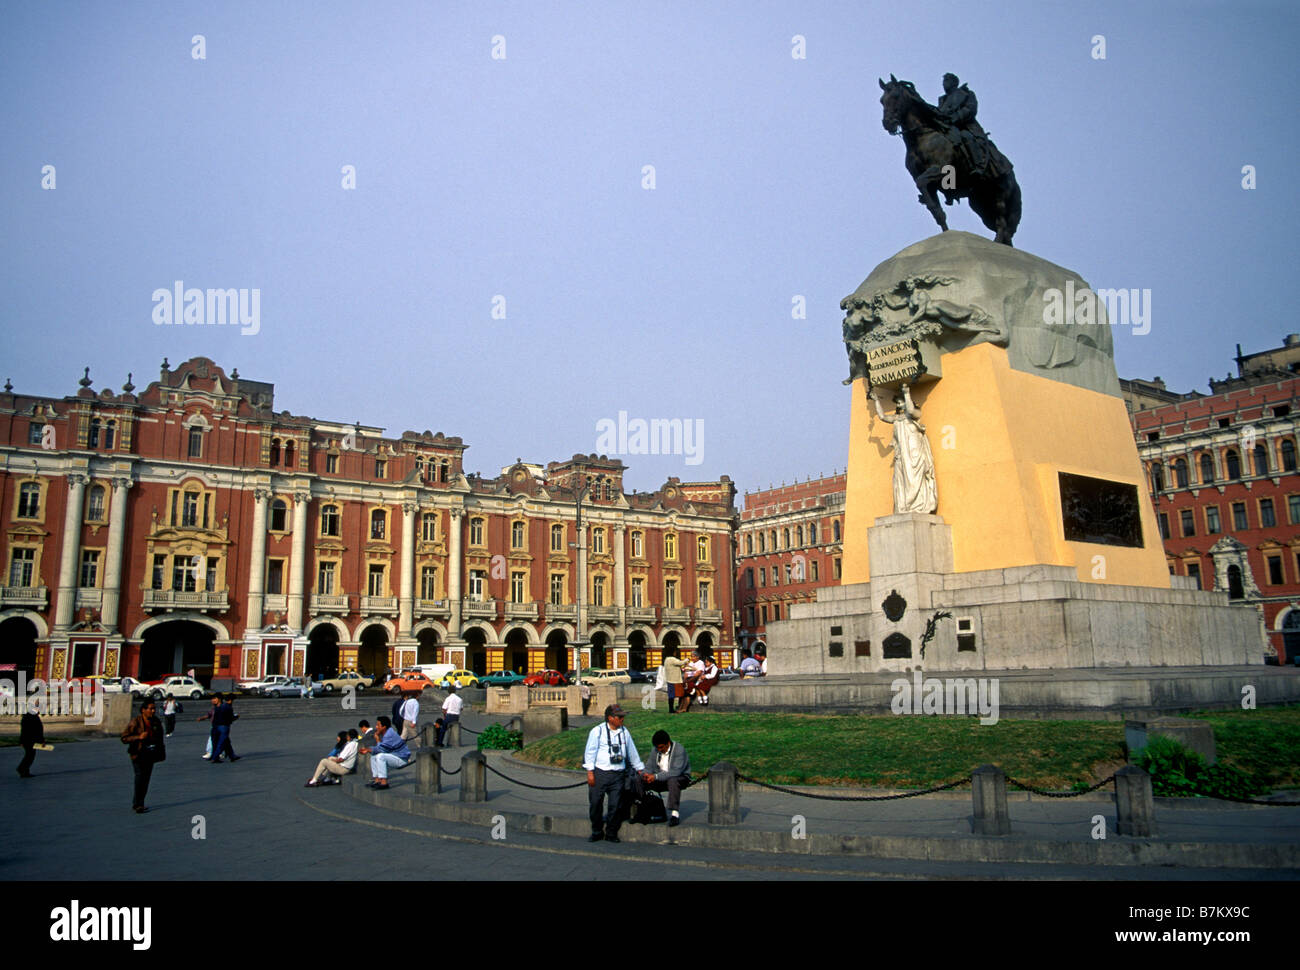 Peruvians, Peruvian people, bronze equestrian statue, General San Martin, Plaza San Martin, Lima, Lima Province, Peru, South America Stock Photo